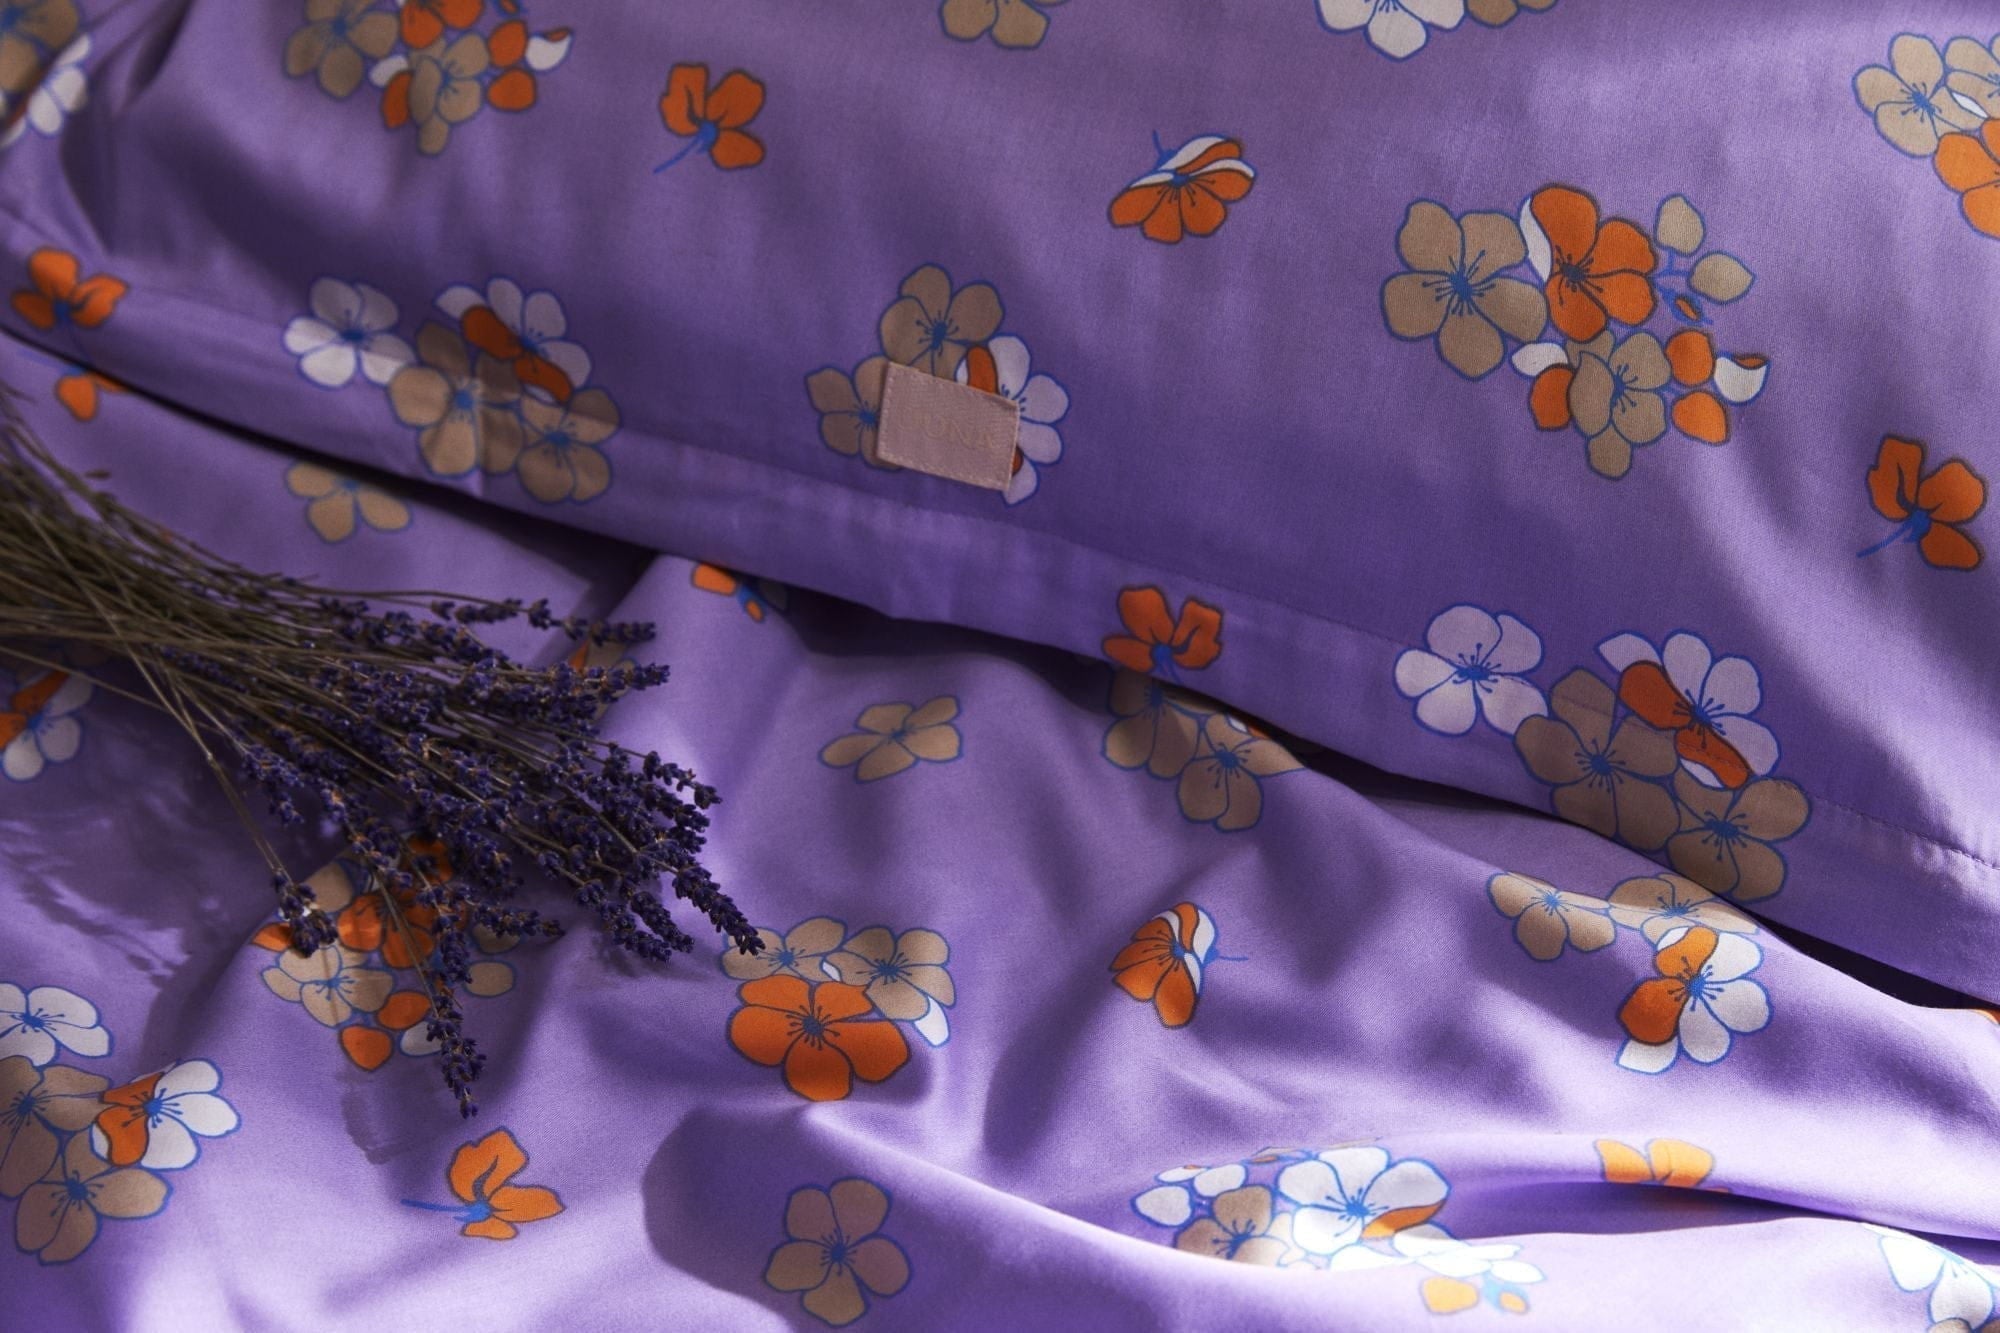 Juna Grand Pleasantly Pillowcase 63x60 Cm, Purple